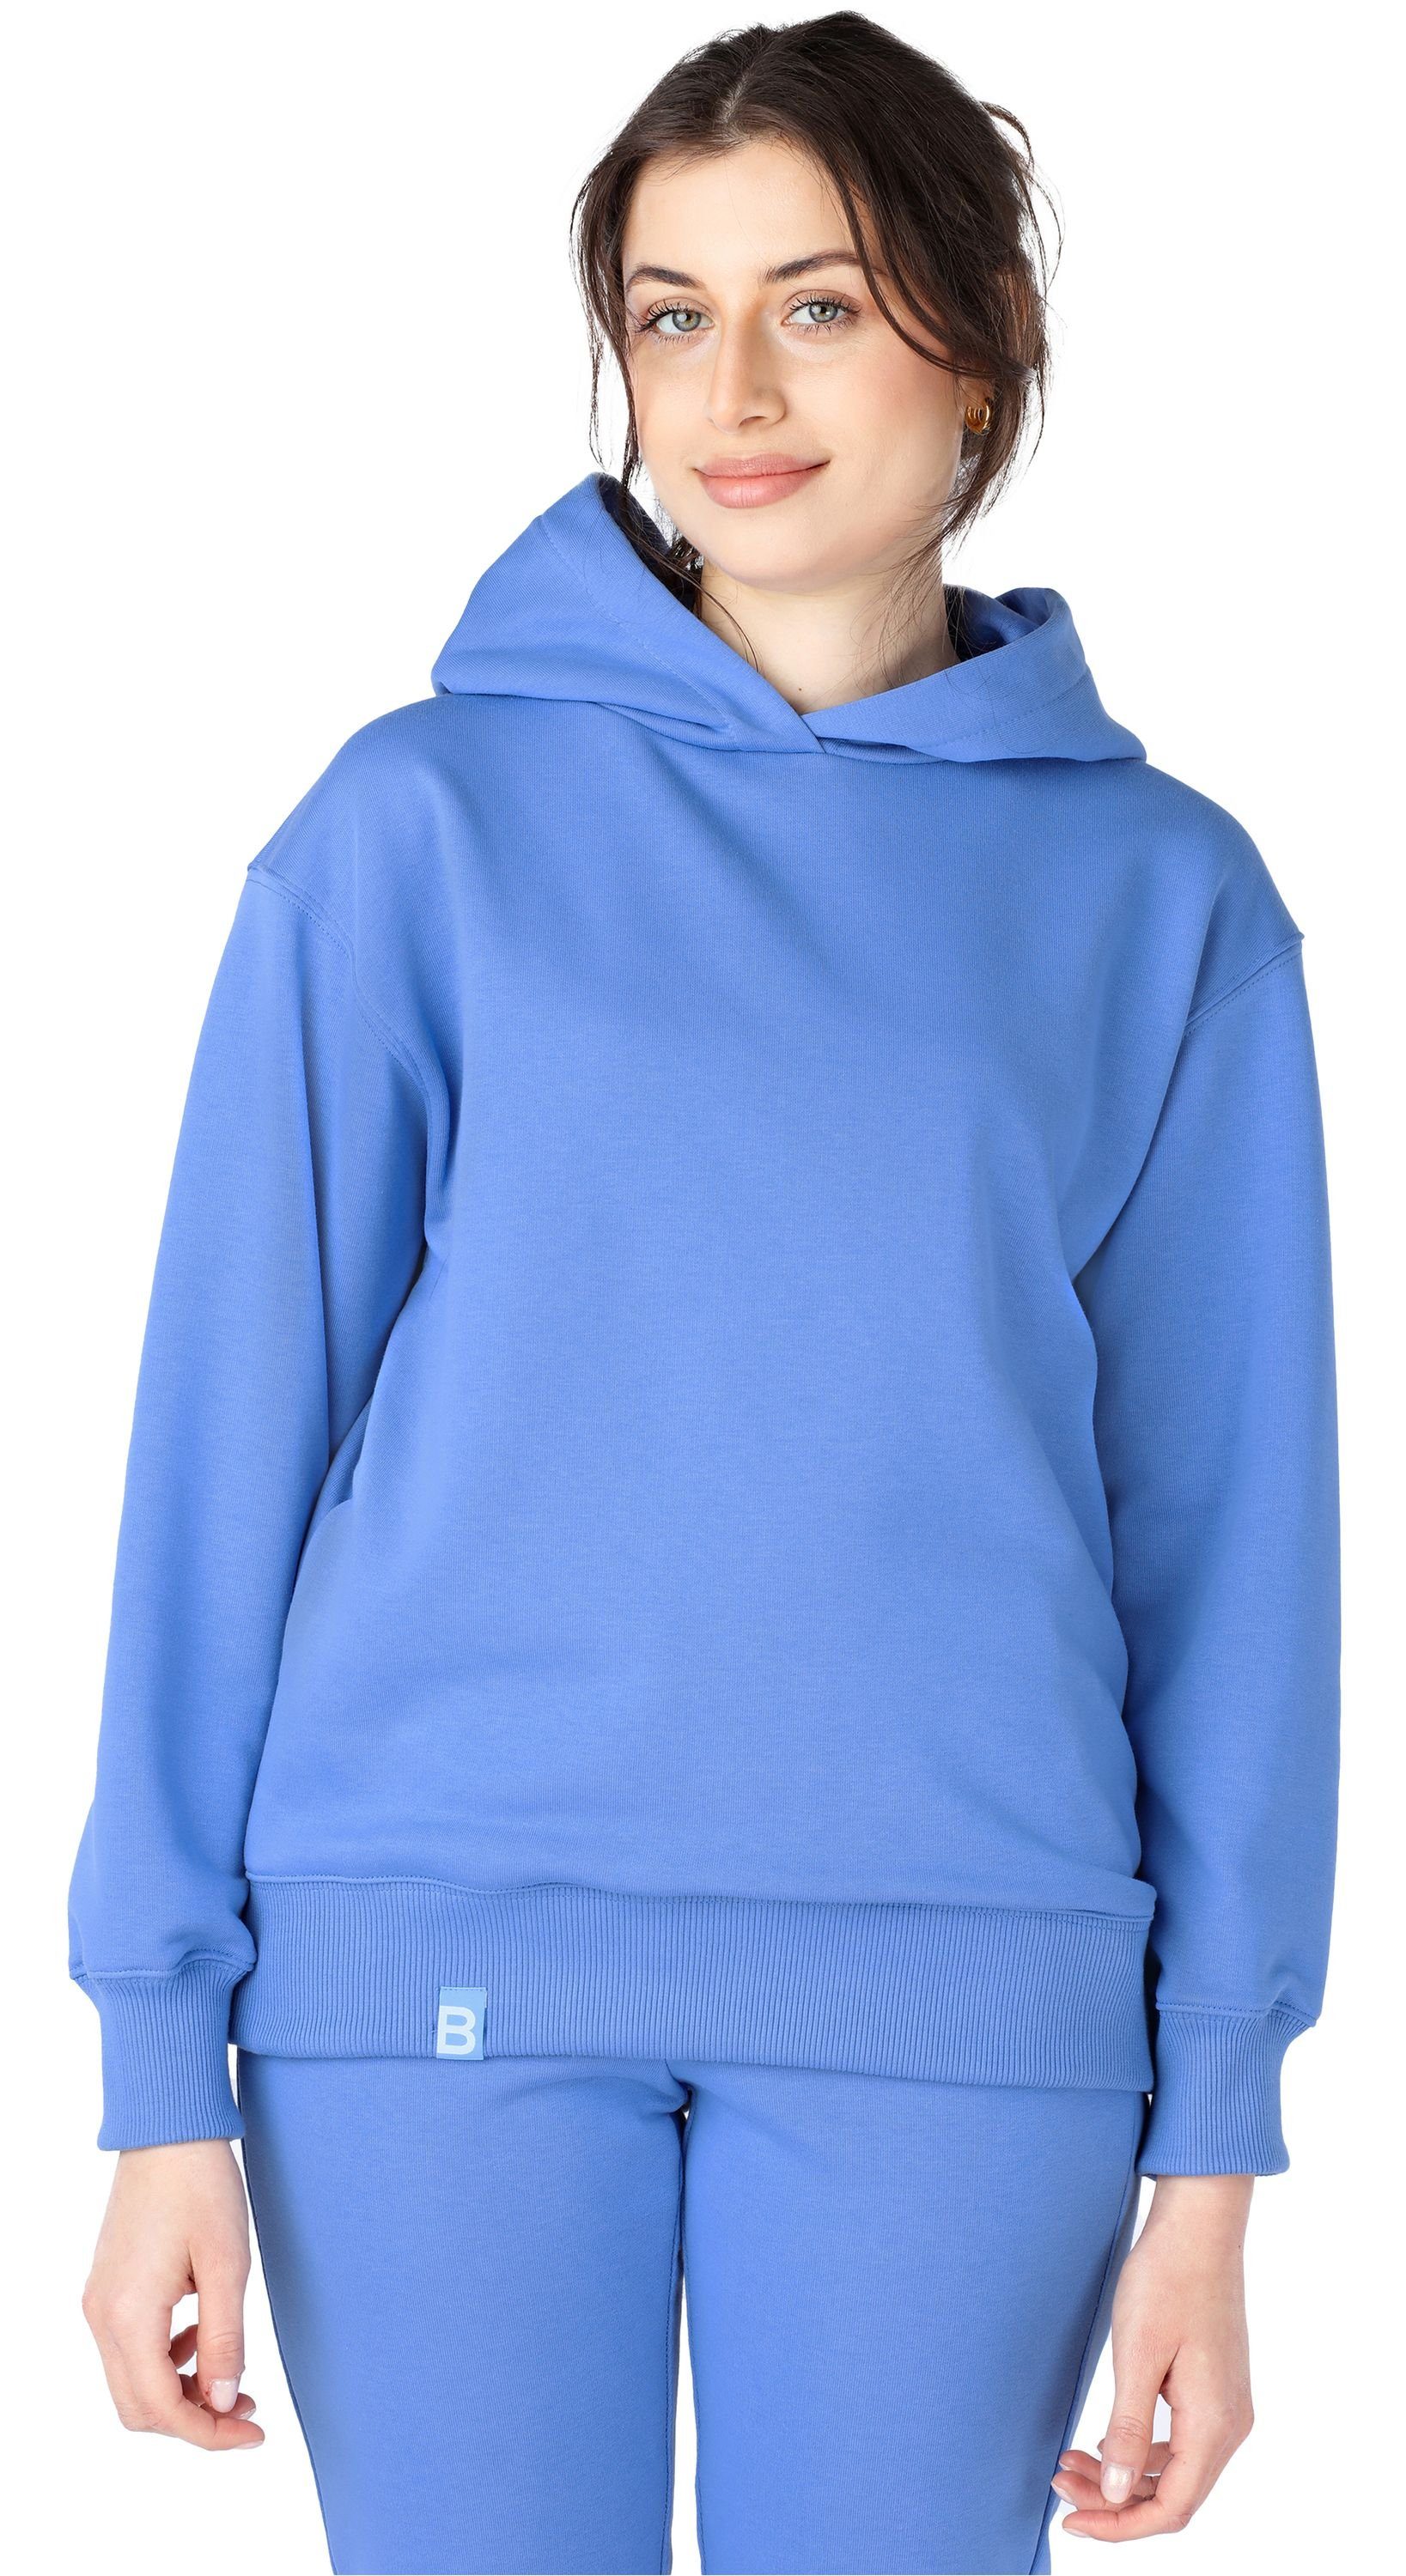 Bellivalini Kapuzensweatshirt Kapuzenpullover lang Damen Hoodie Sportanzug Oberteil Pullover BLV210 Blau